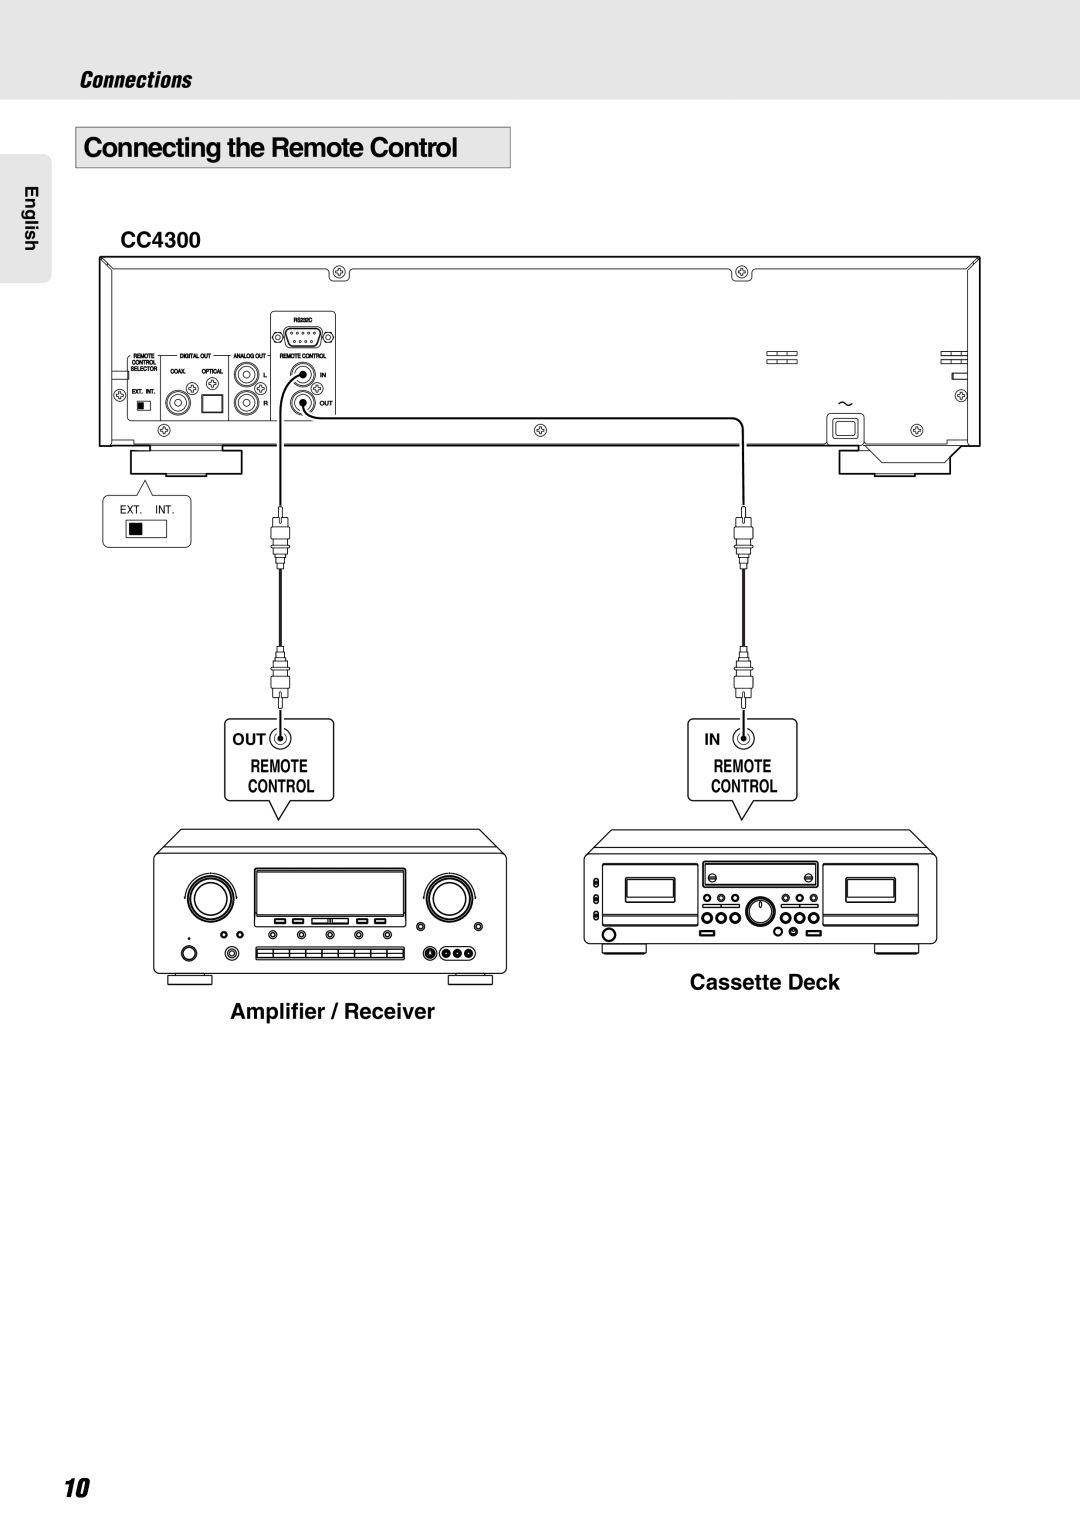 Marantz CC4300 Connecting the Remote Control, Cassette Deck Amplifier / Receiver, Connections, RS232C, Digital Out, Coax 